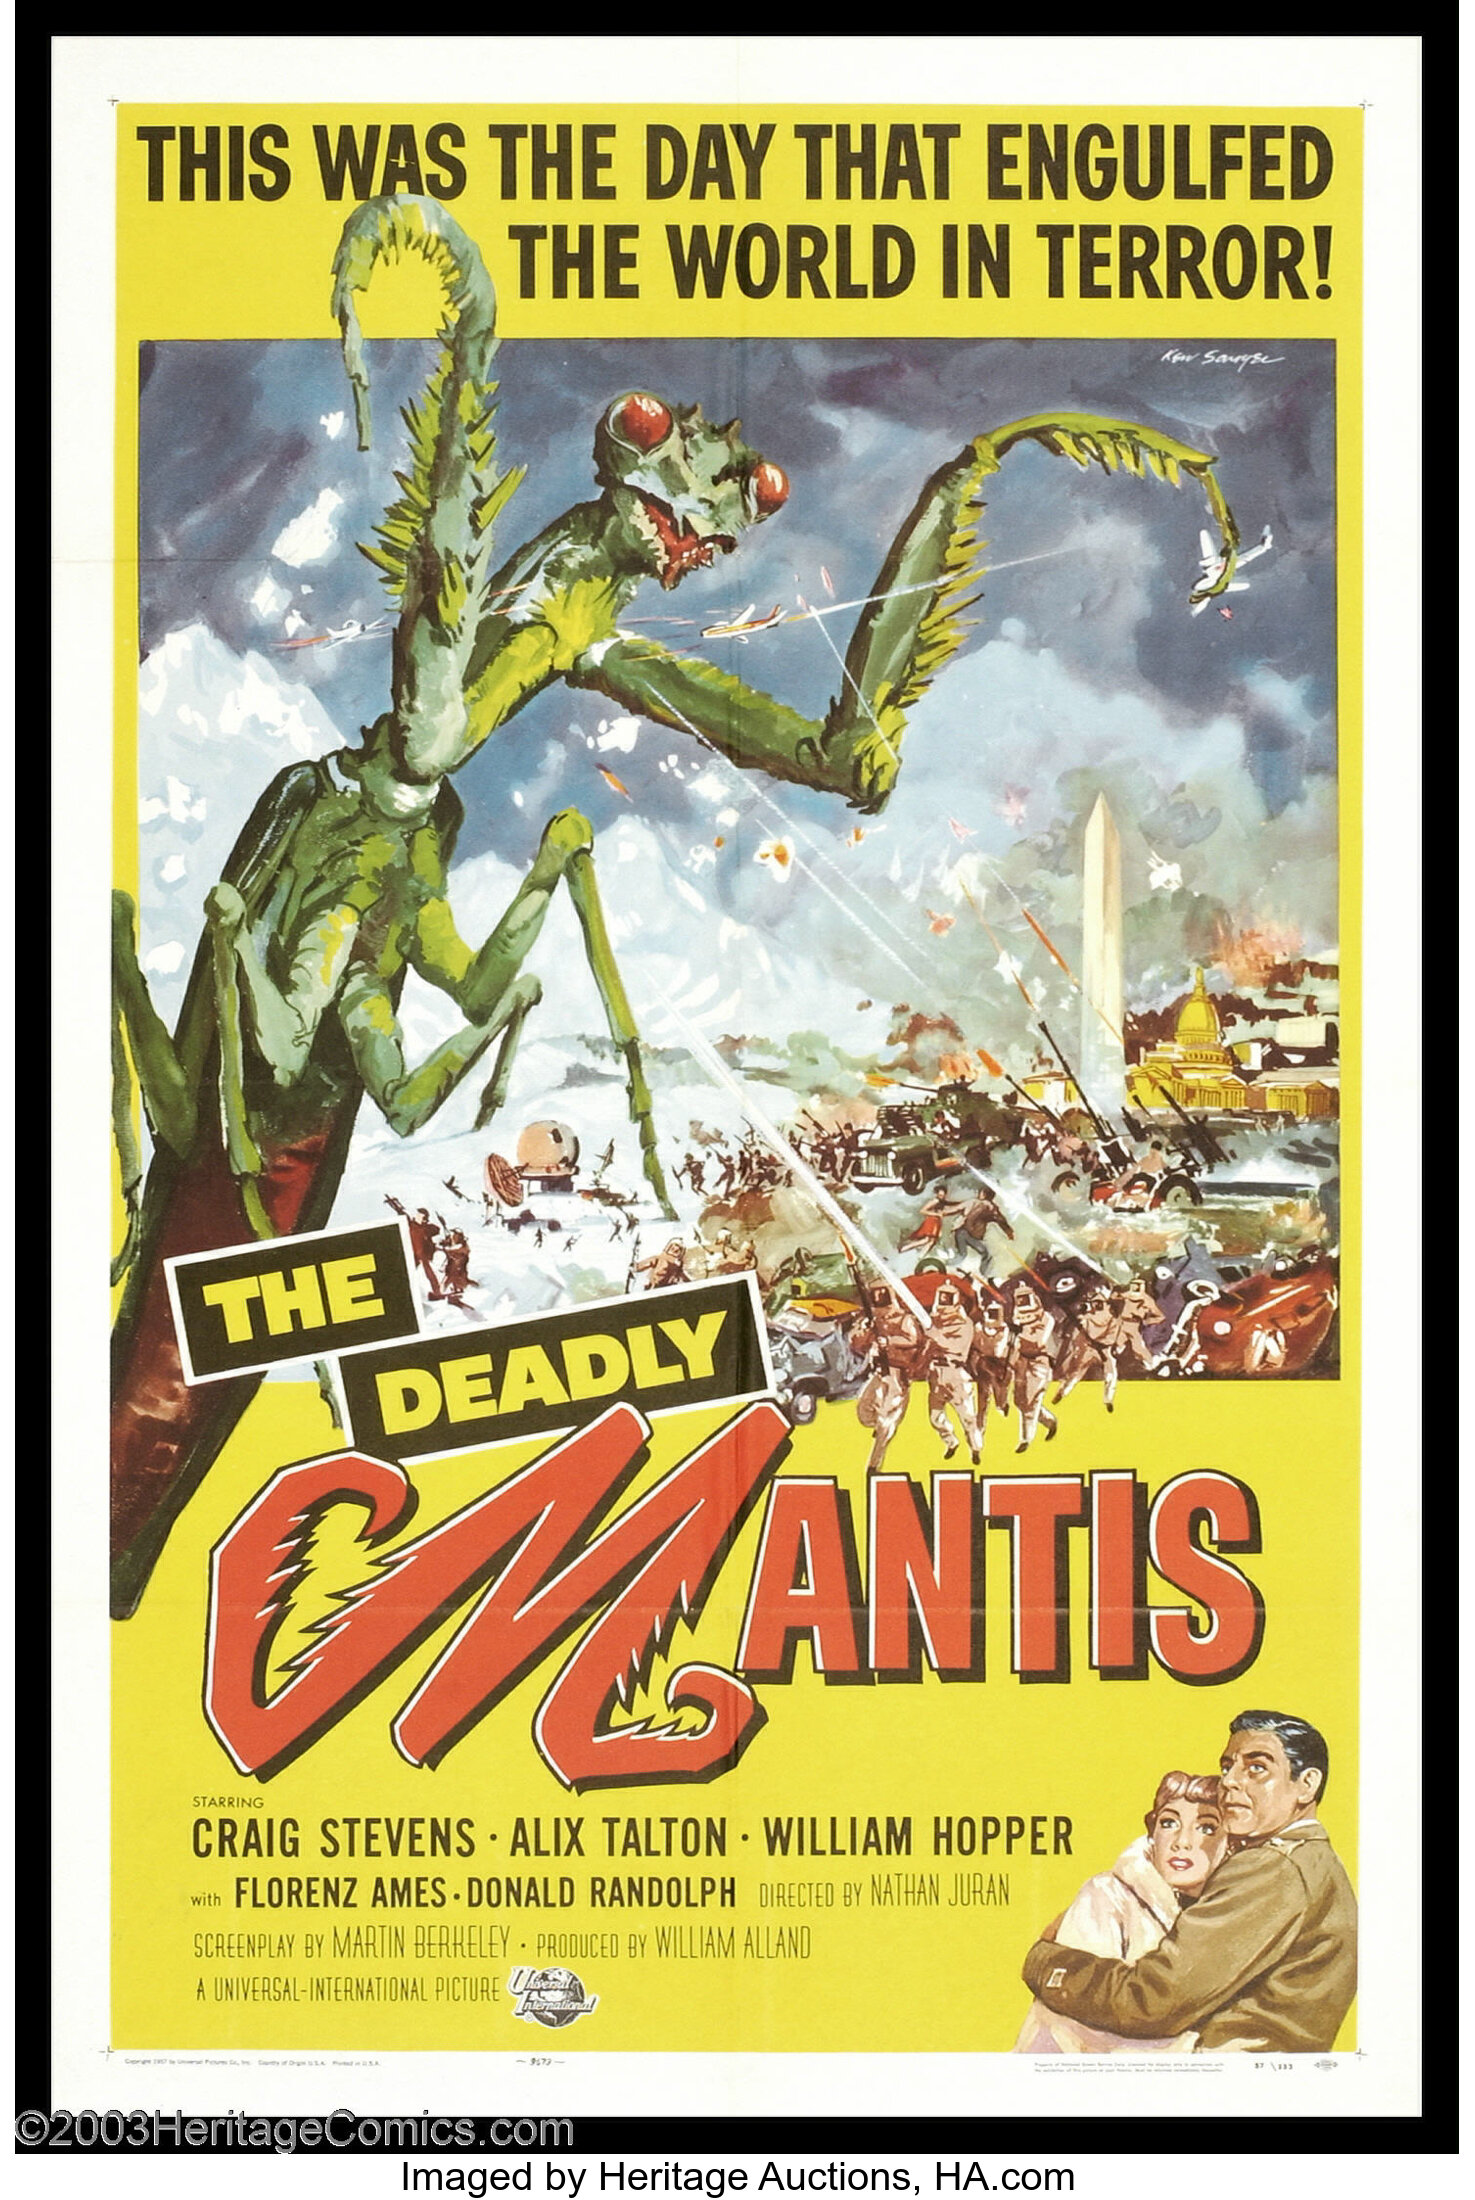 giant praying mantis movie